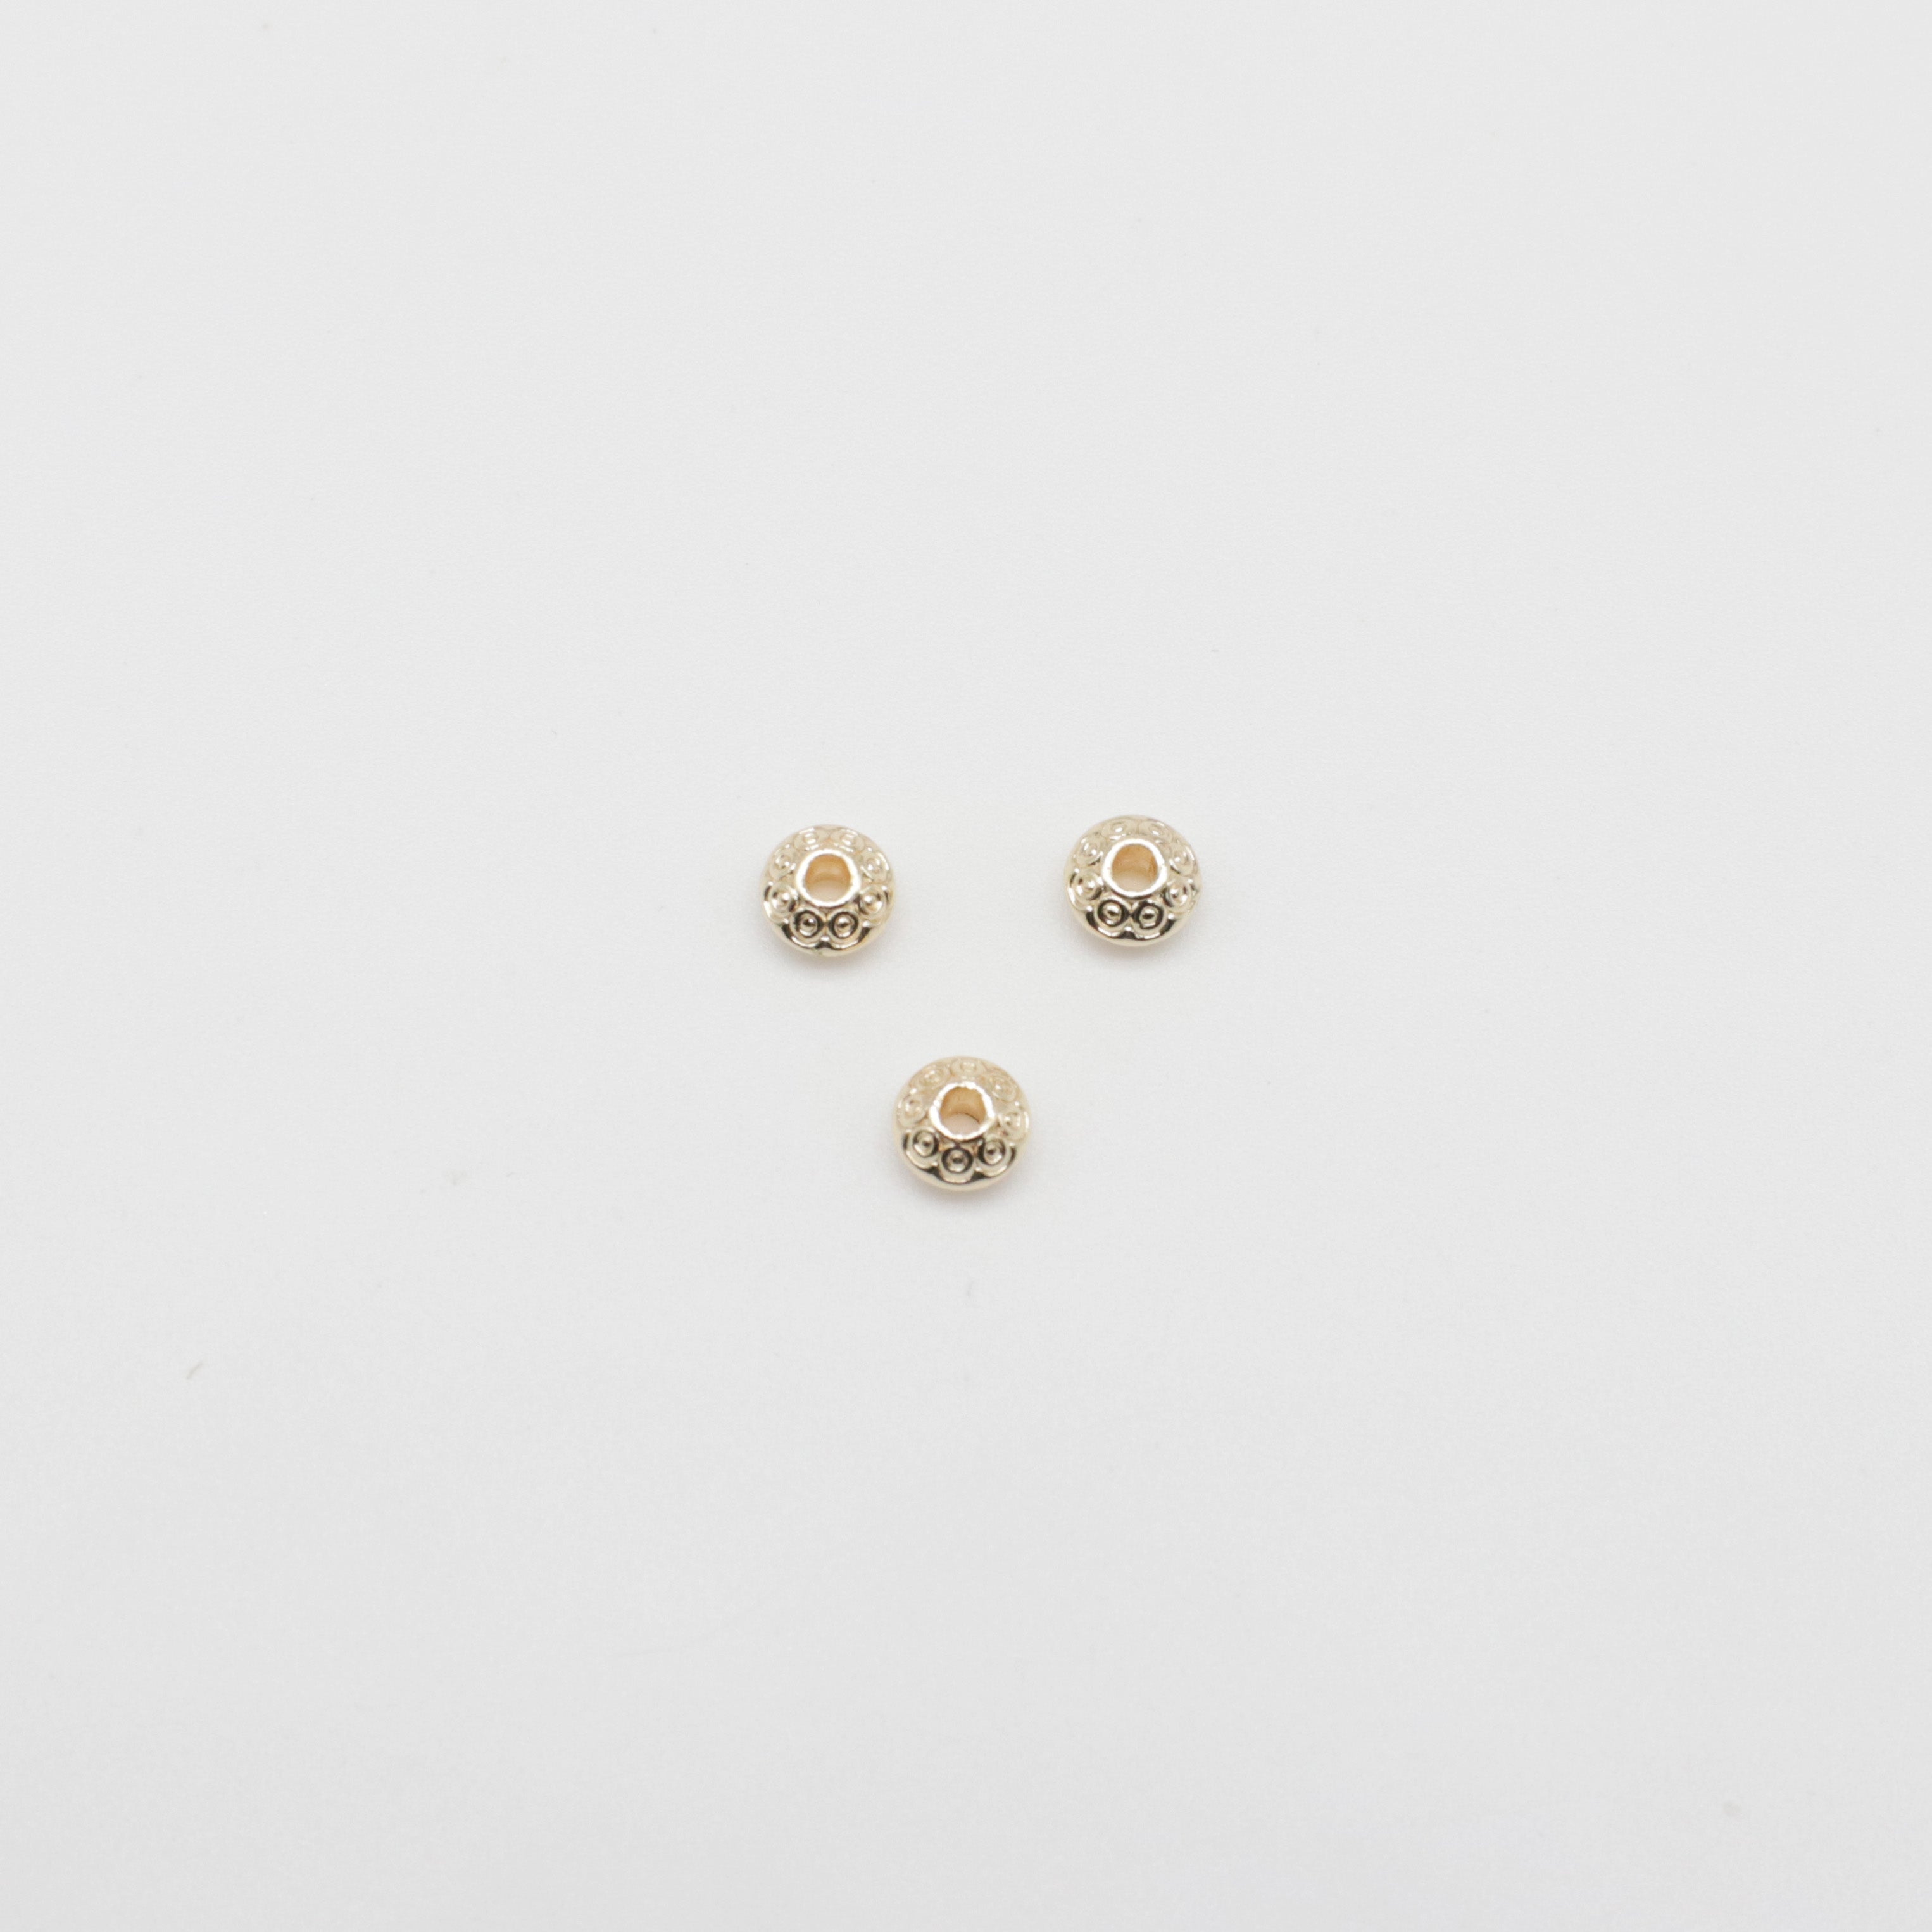 5,5 mm große Abucas-Perlen aus Messing mit Muster